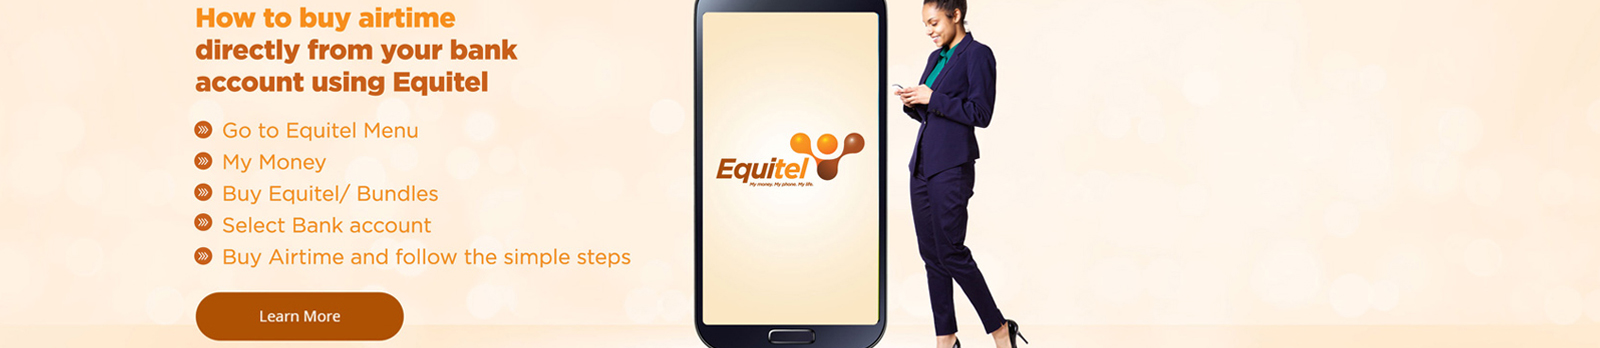 Equitel Buy Airtime